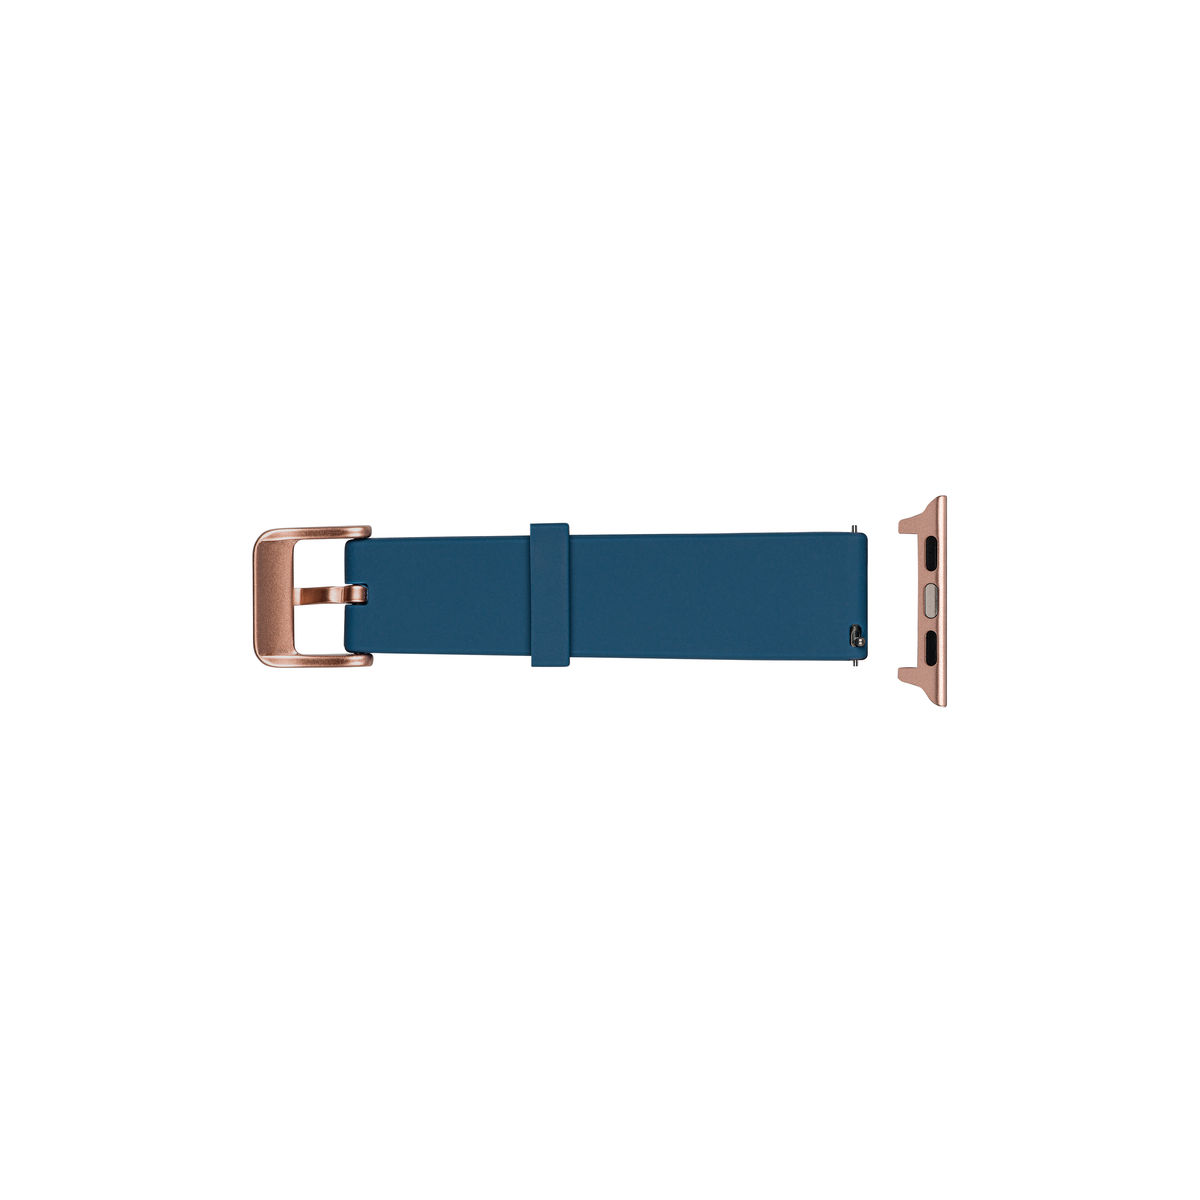 (41mm), 3-1 9-7 (40mm), Silicone, SE Watch Ersatzarmband, Apple Apple, & ARTWIZZ (38mm), 6-4 Blau WatchBand